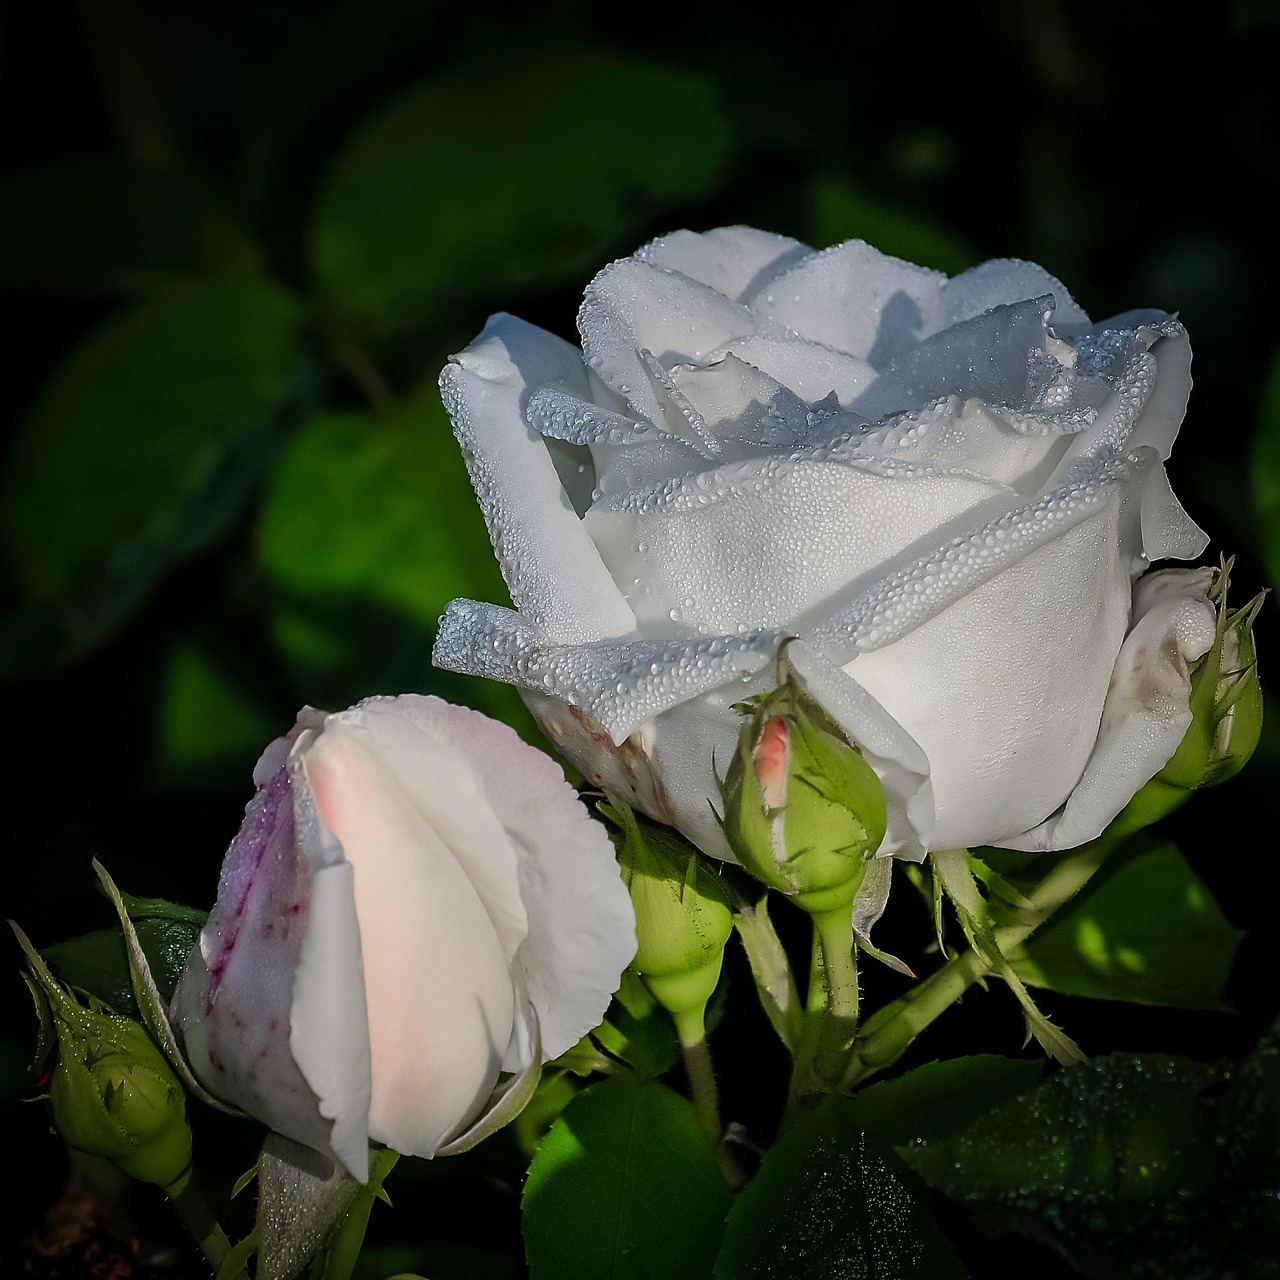 rose white flower free photo